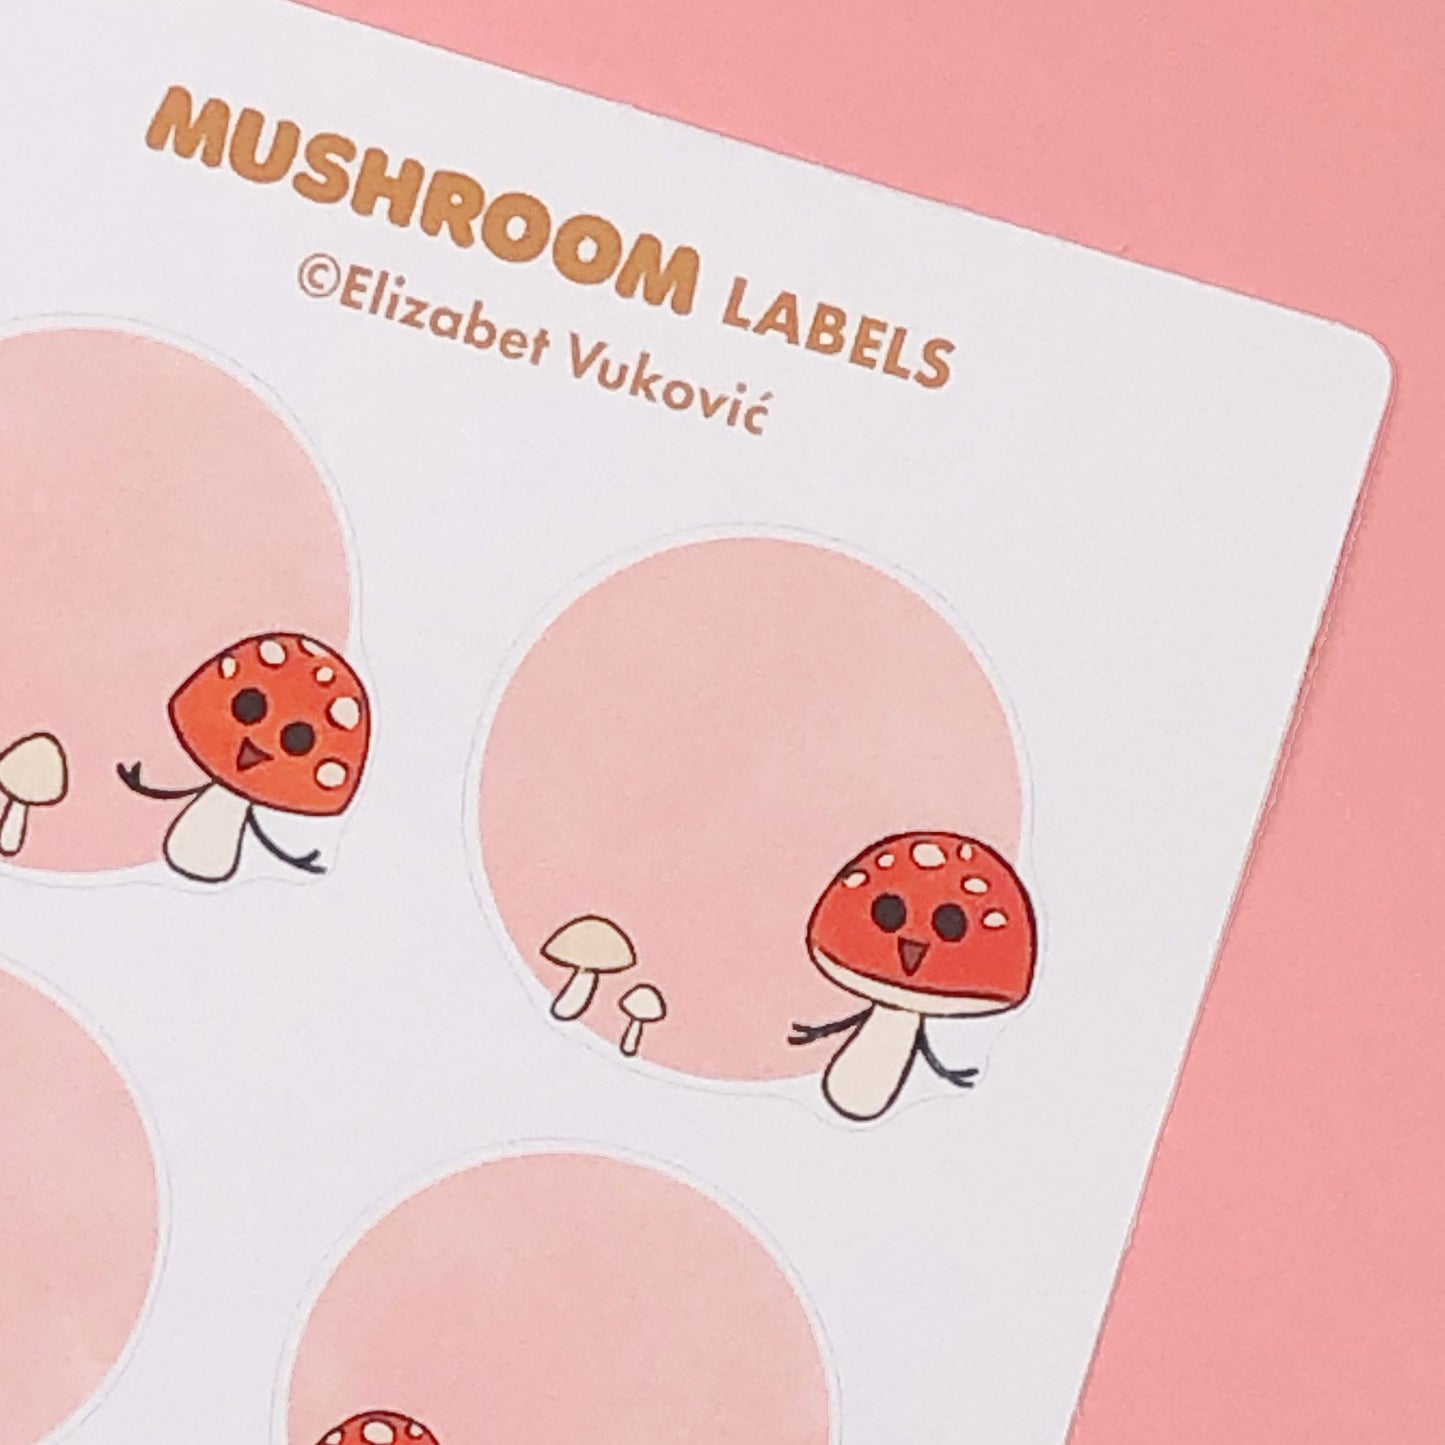 Small mushrooms art round labels.